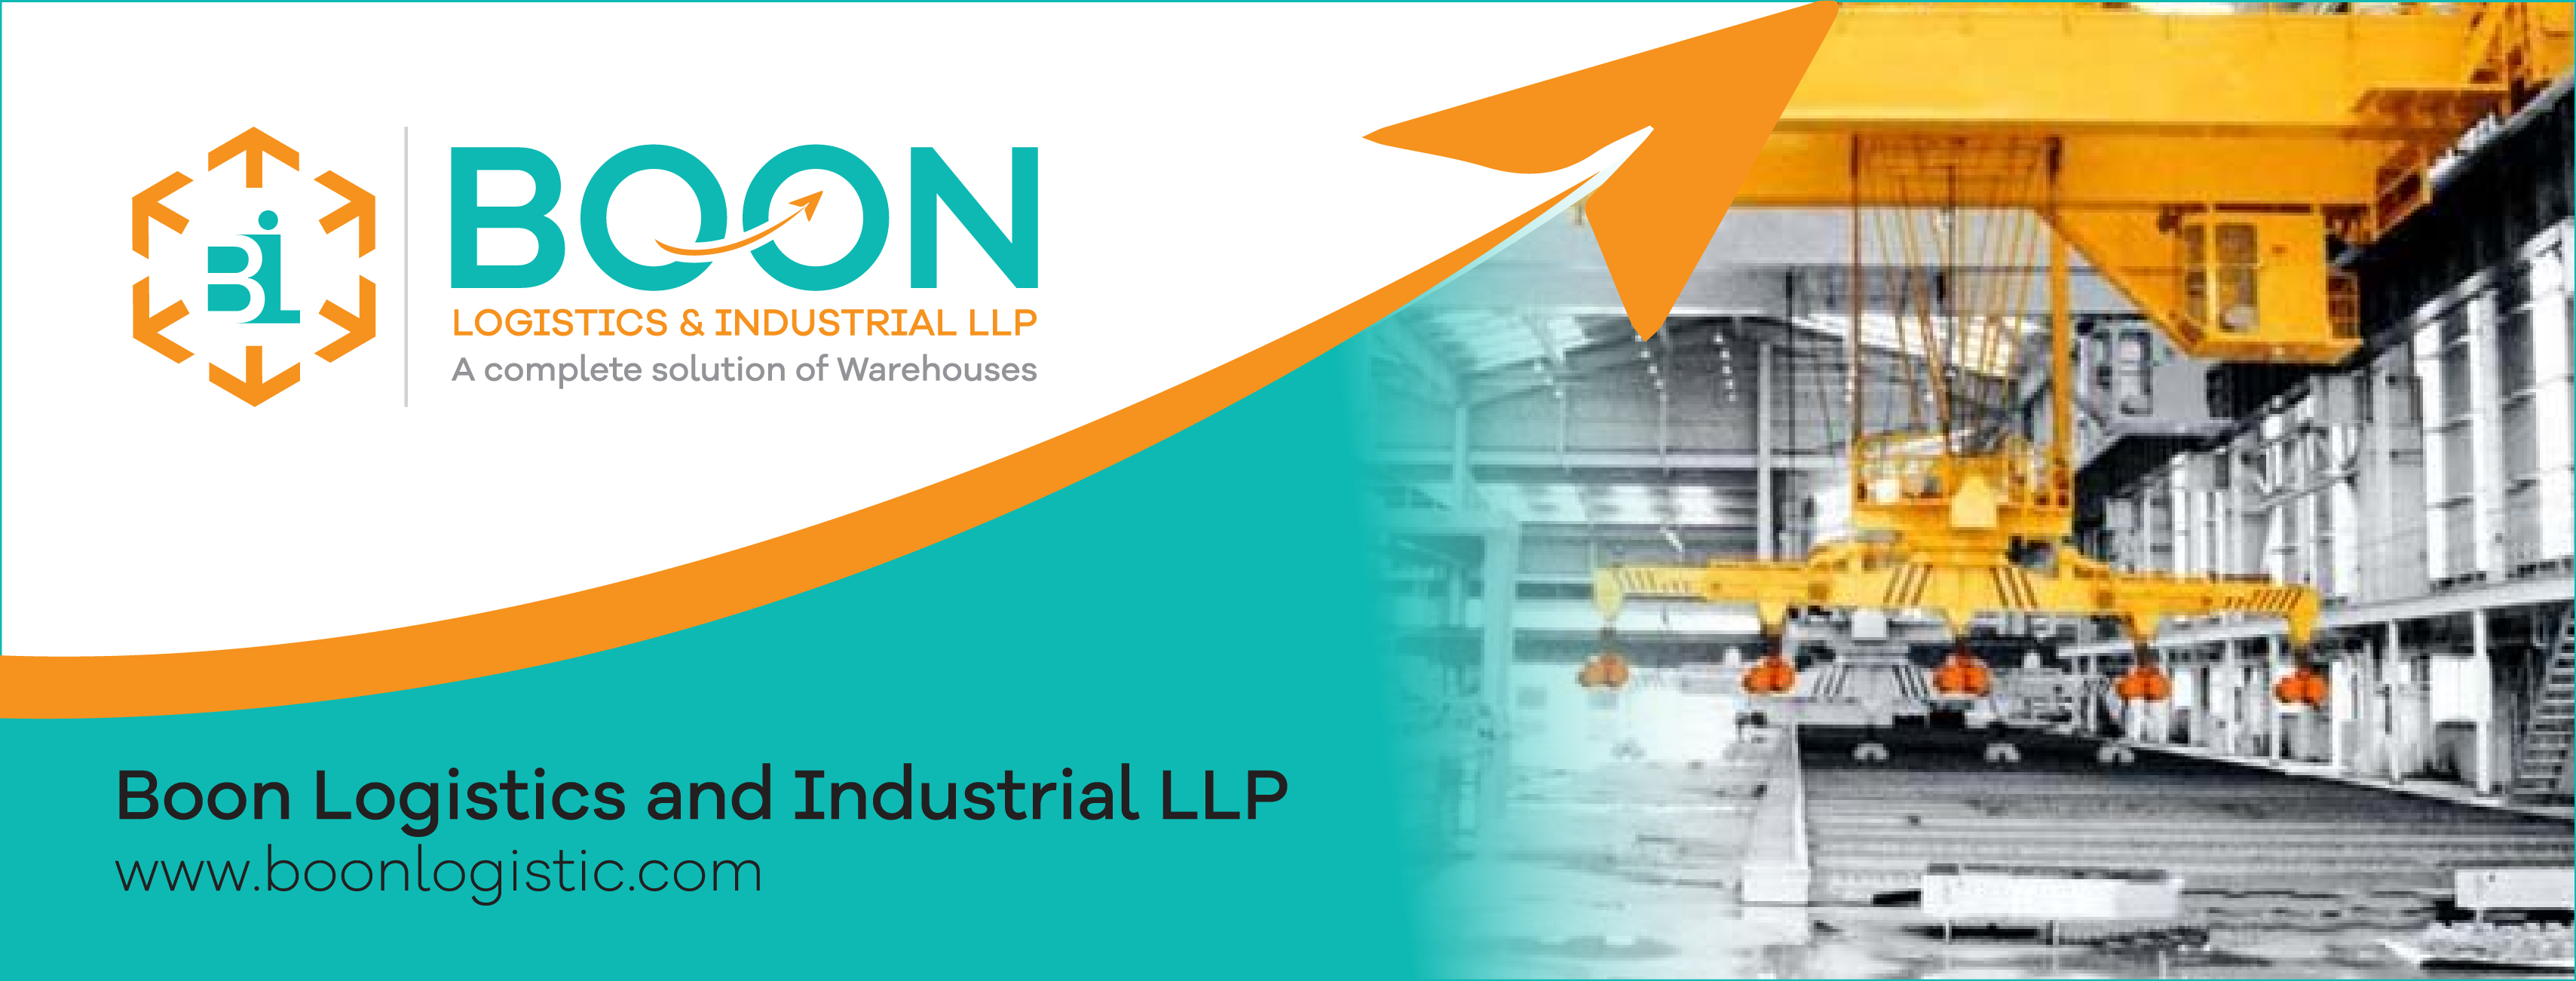 BOON Logistics & Industrial LLP | Home